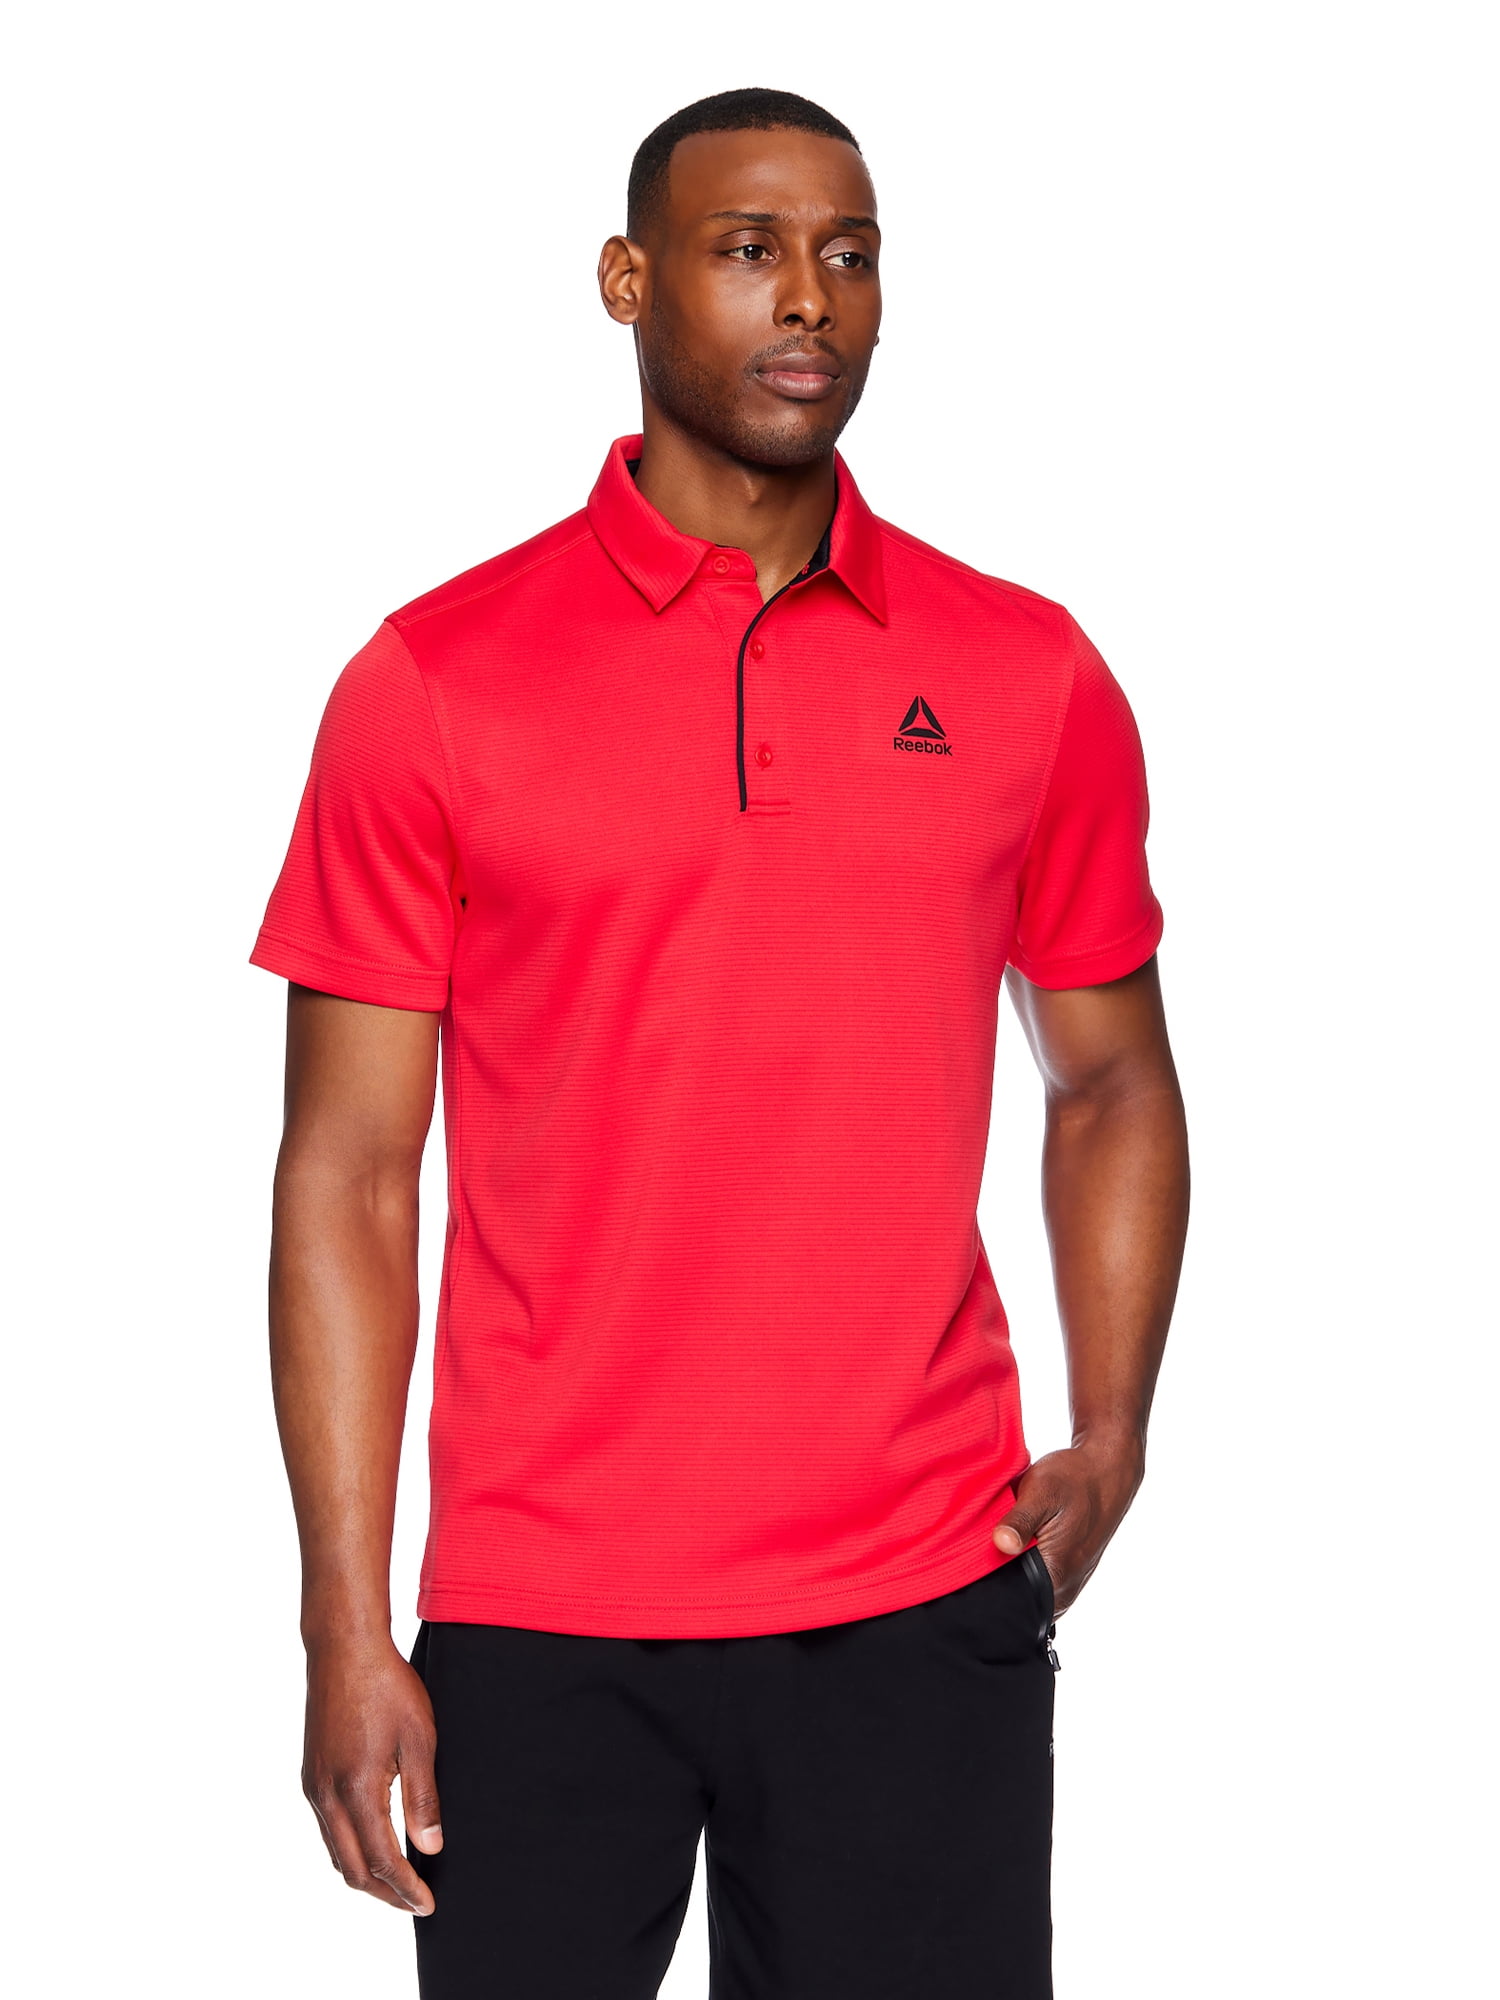 REEBOK Reebok GSP JERSEY - Camiseta hombre black/red - Private Sport Shop